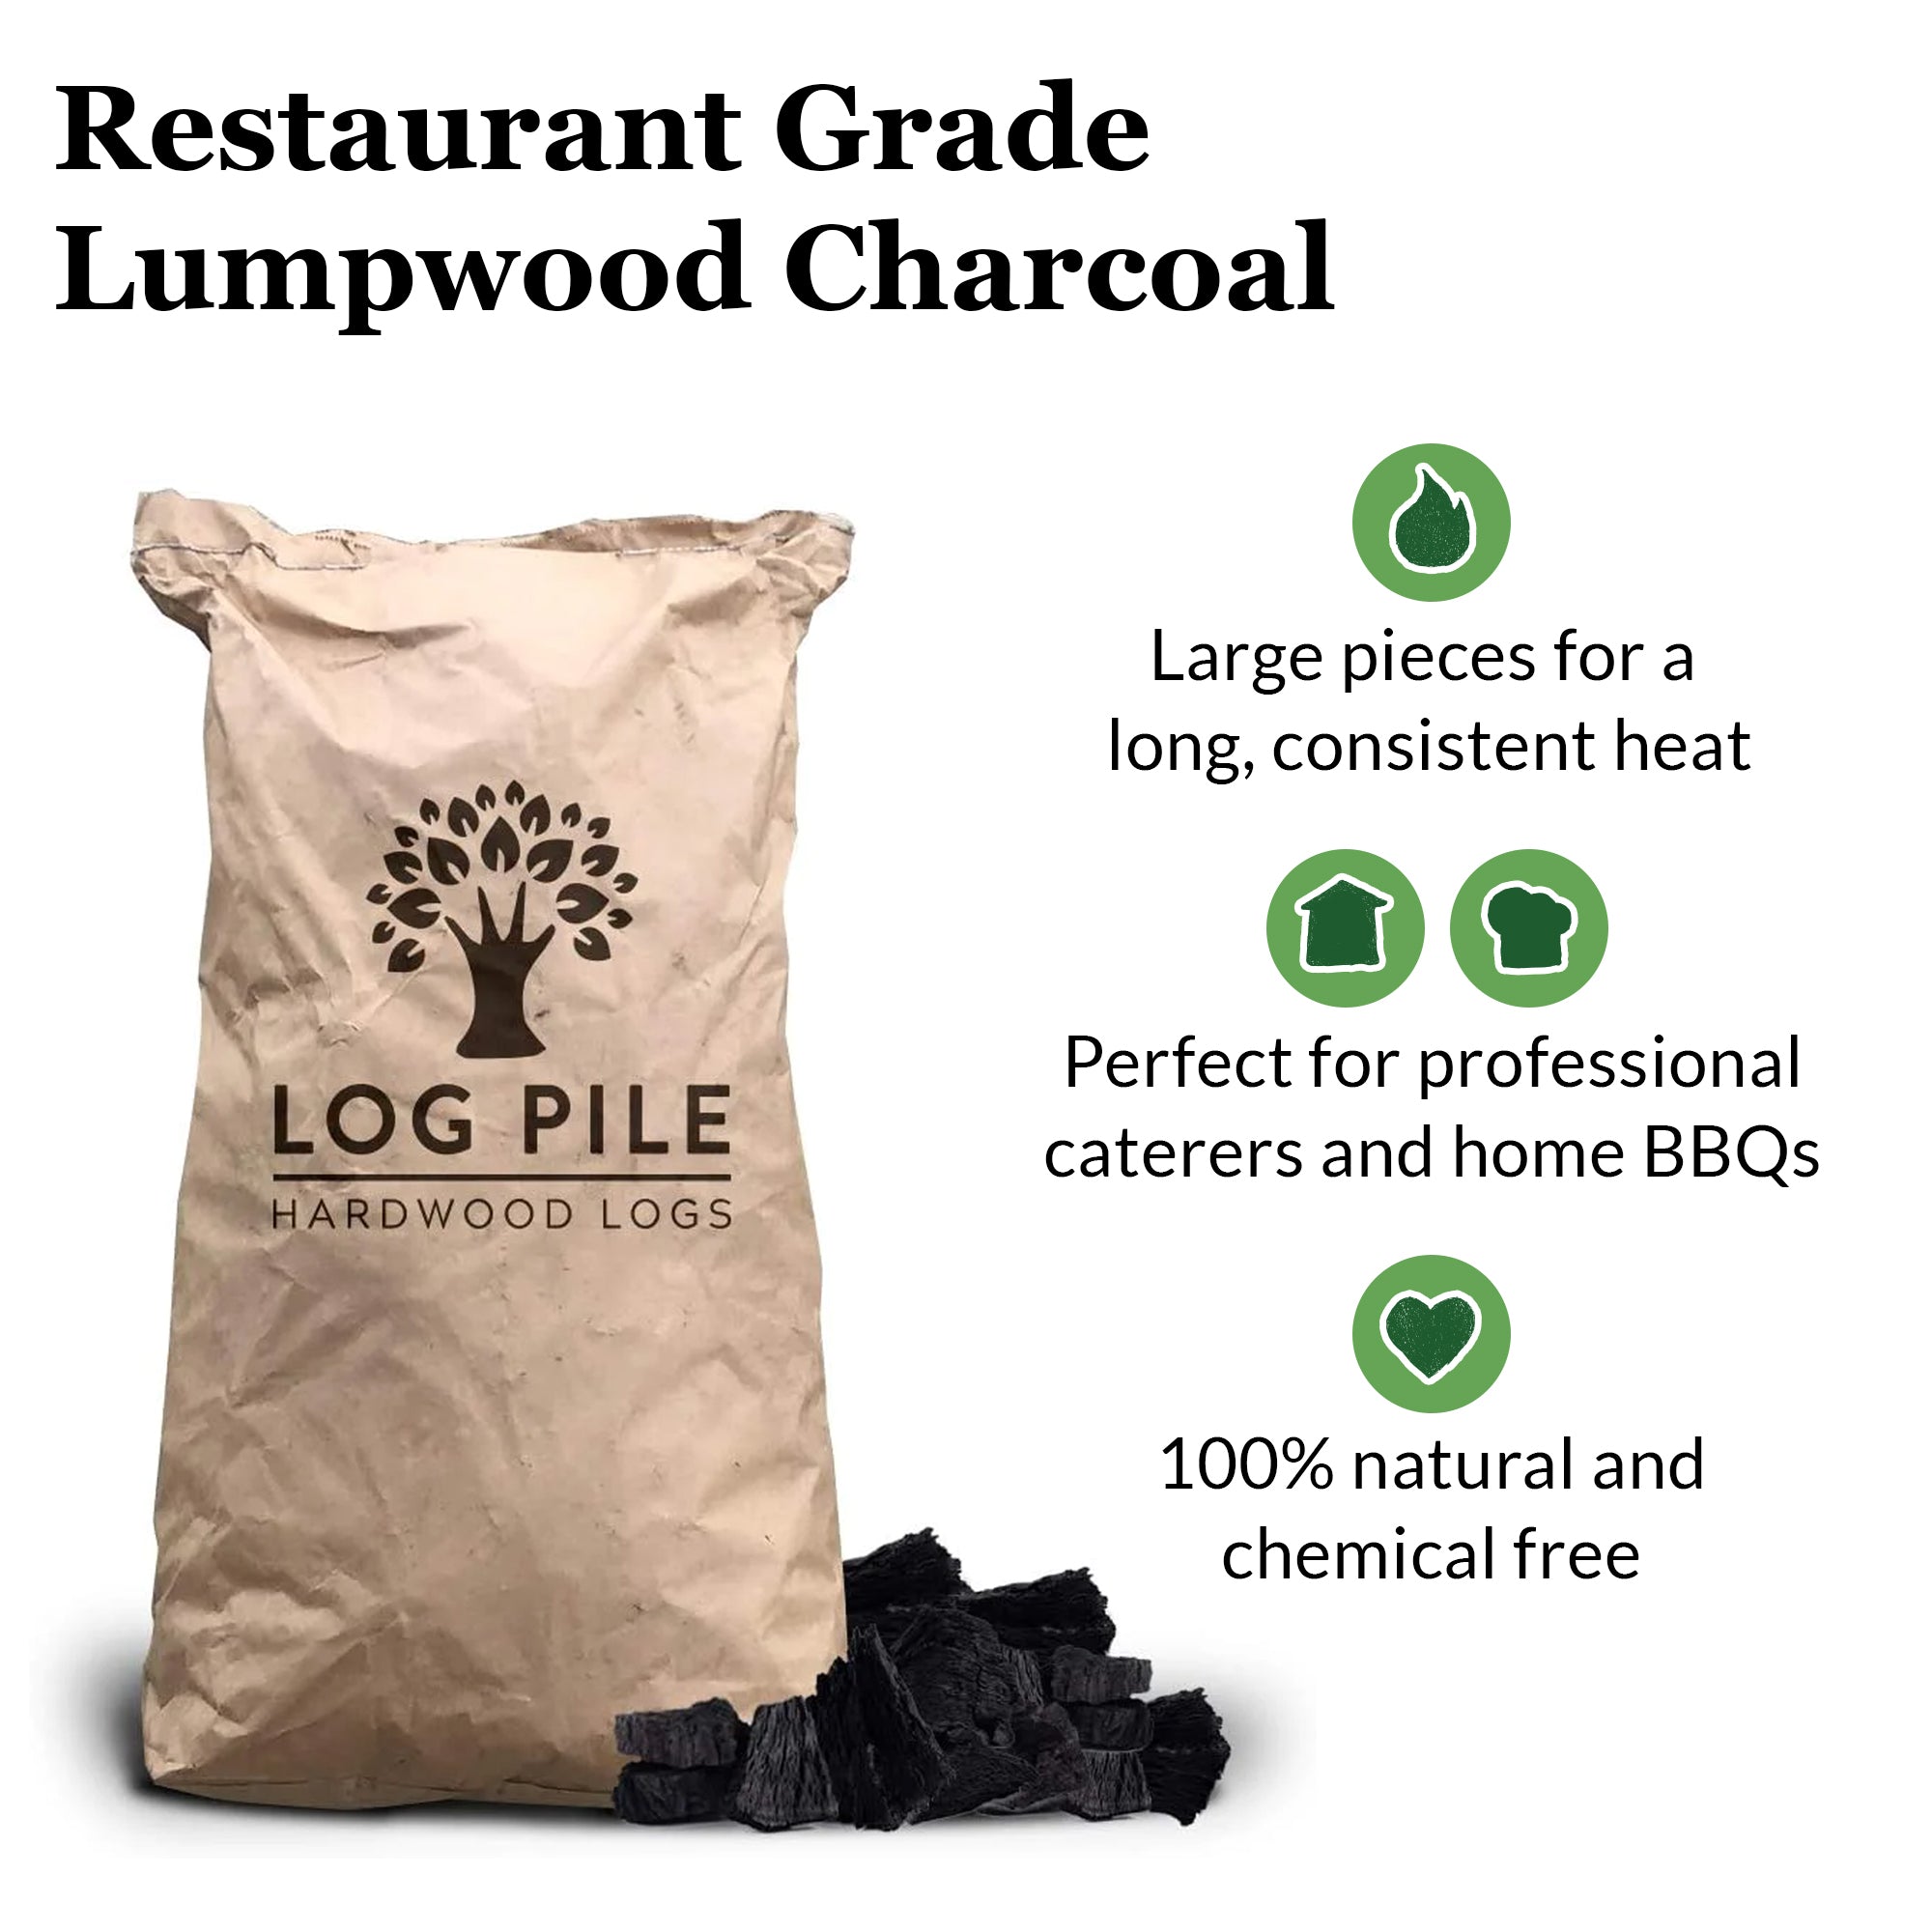 Charcoal. Restaurant Grade Lumpwood Charcoal.